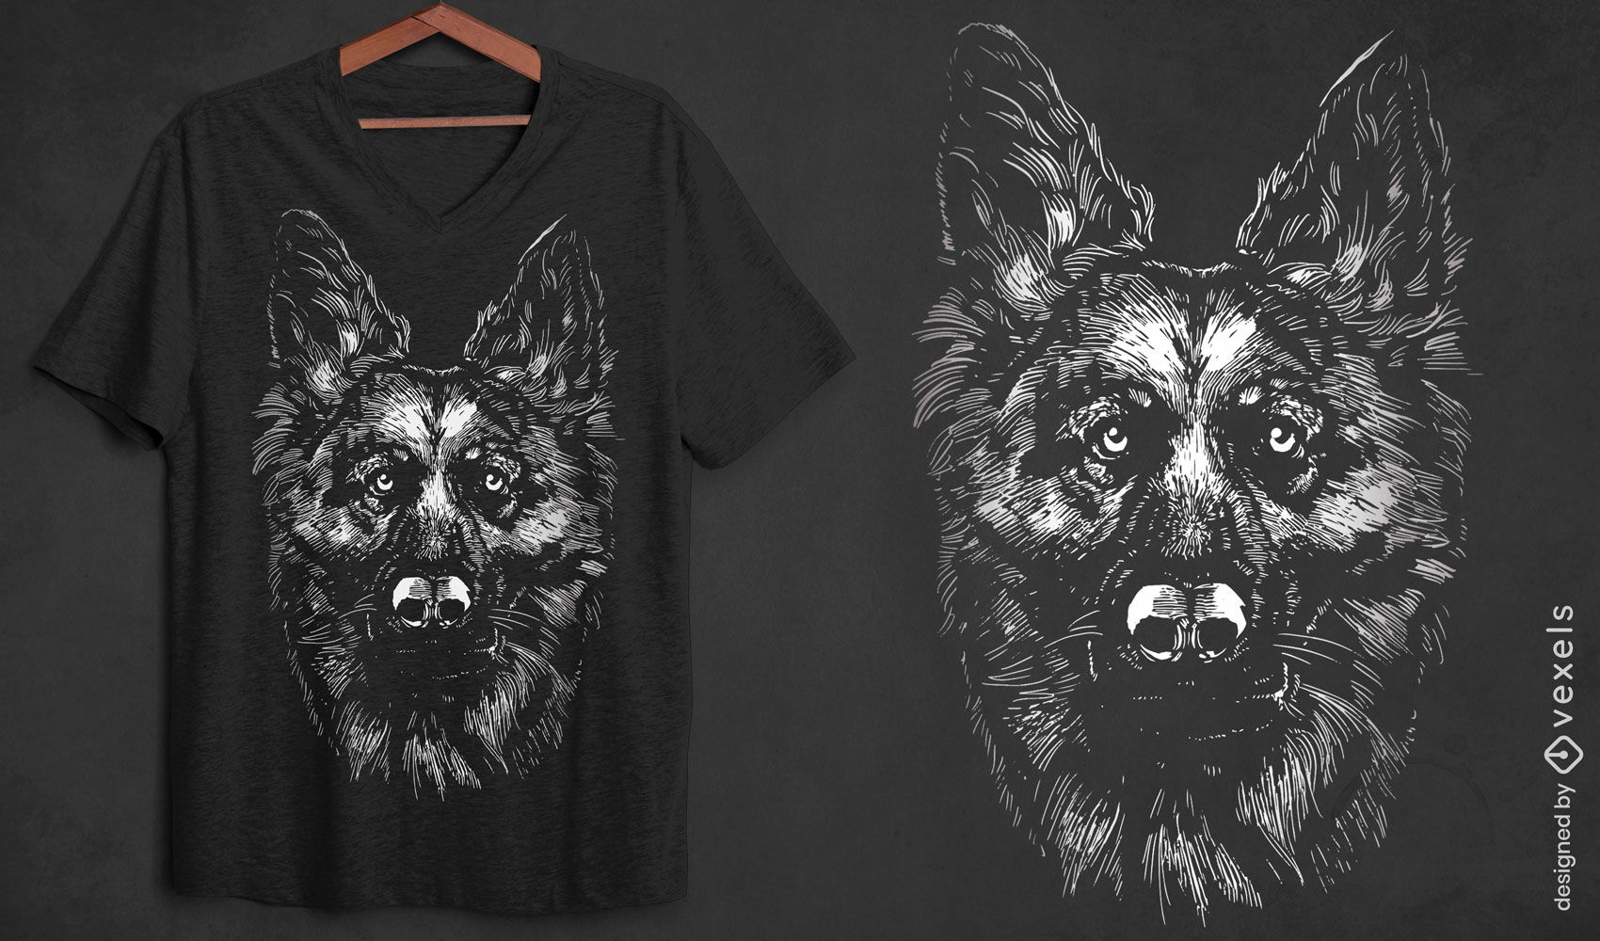 German shepherd dog animal t-shirt design